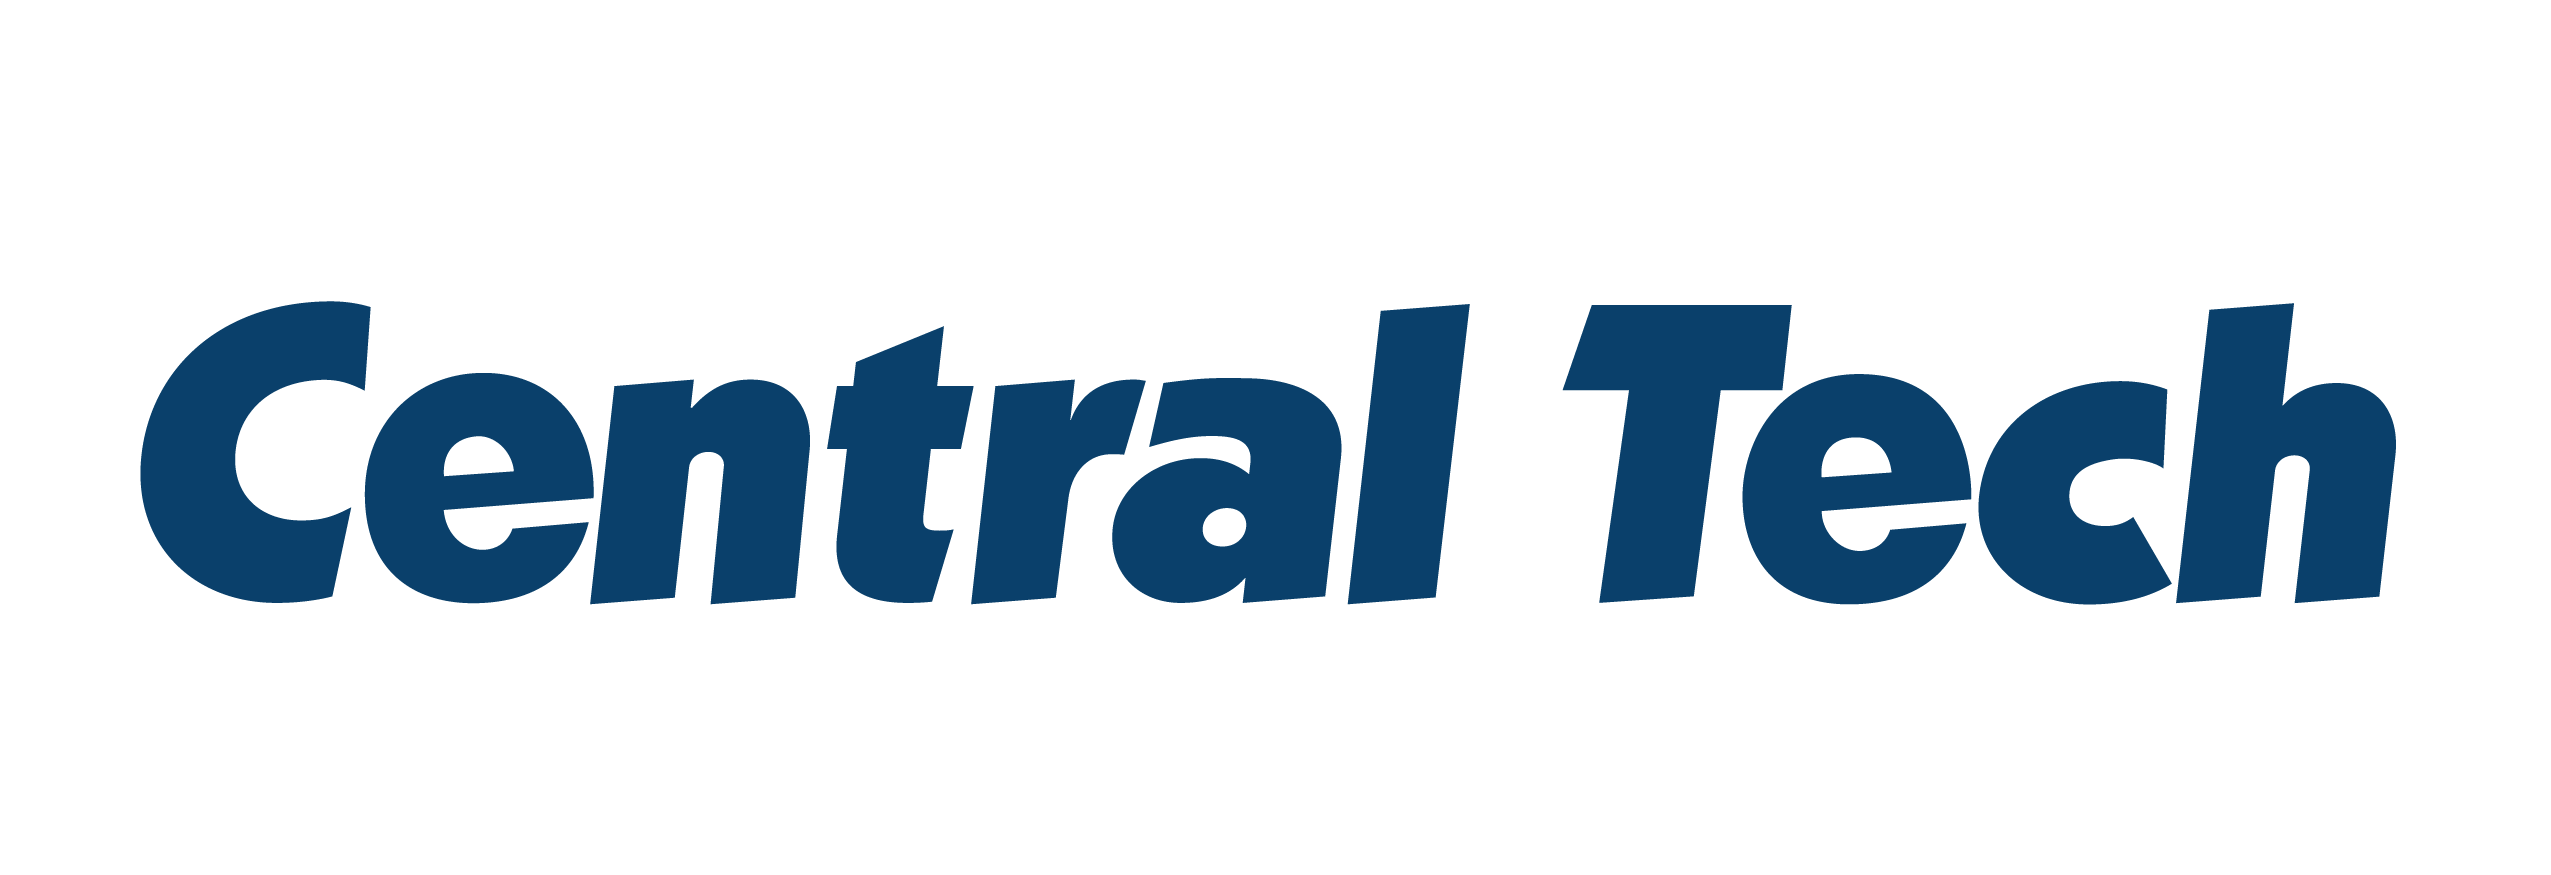 Central Technology Center logo